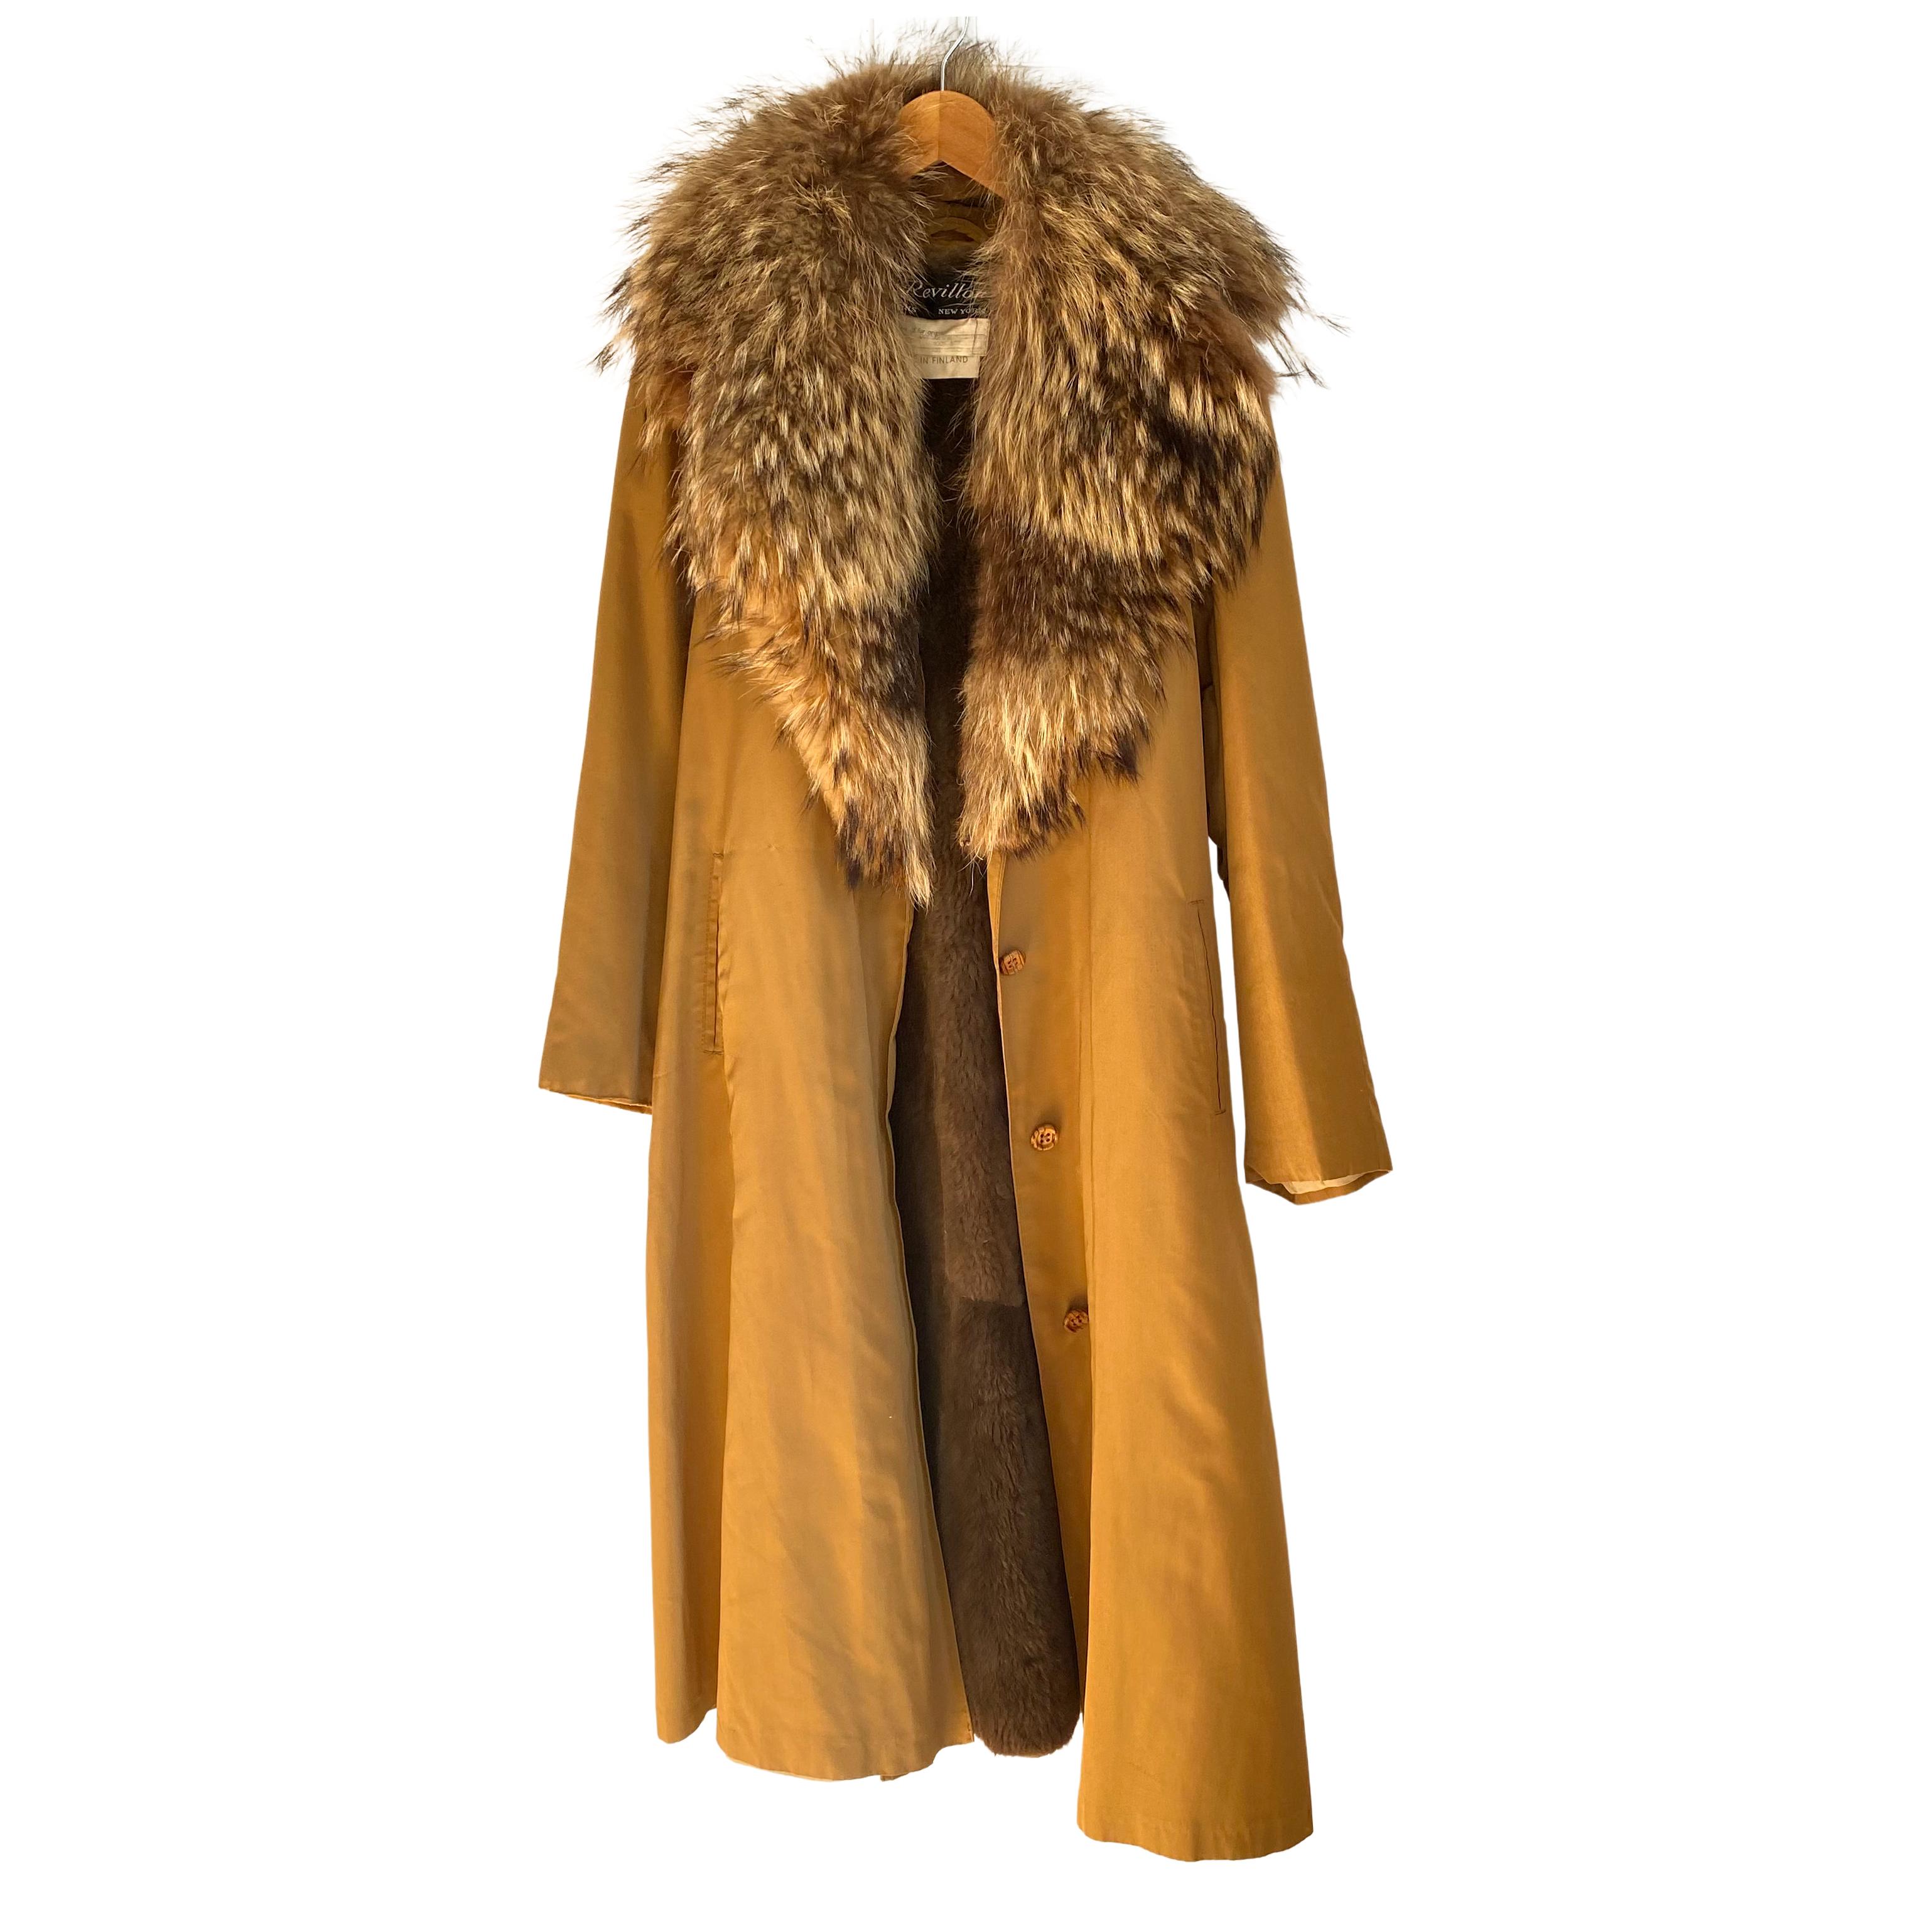 Reveillon Paris weather-proof Trench Coat detachable Fur Collar and Lining 